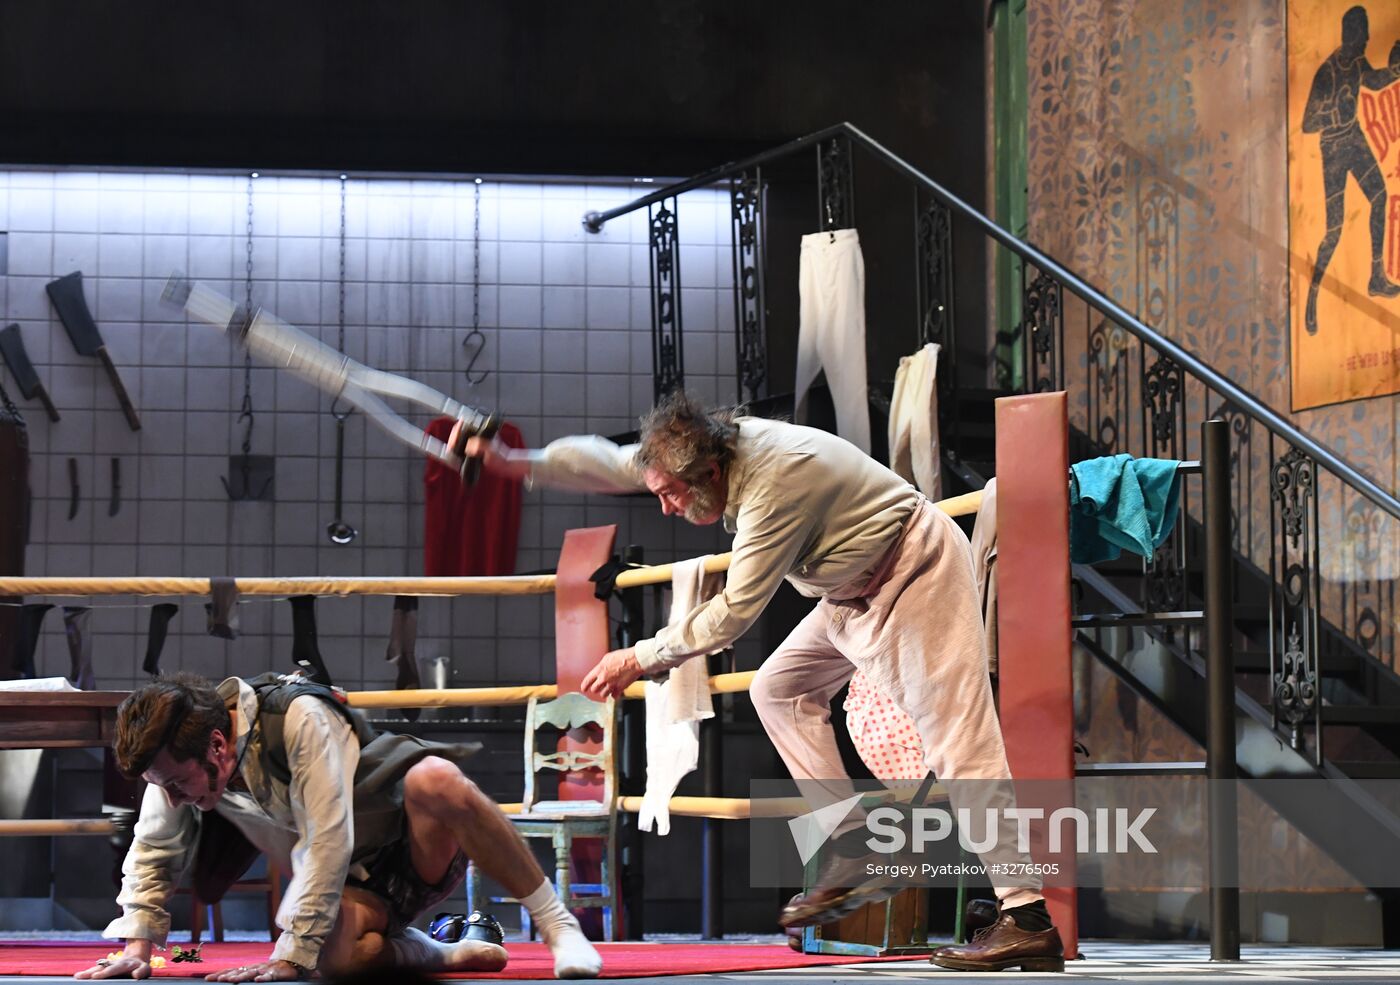 Run-through of play 'Do not become a stranger' in Sovremennik Theater